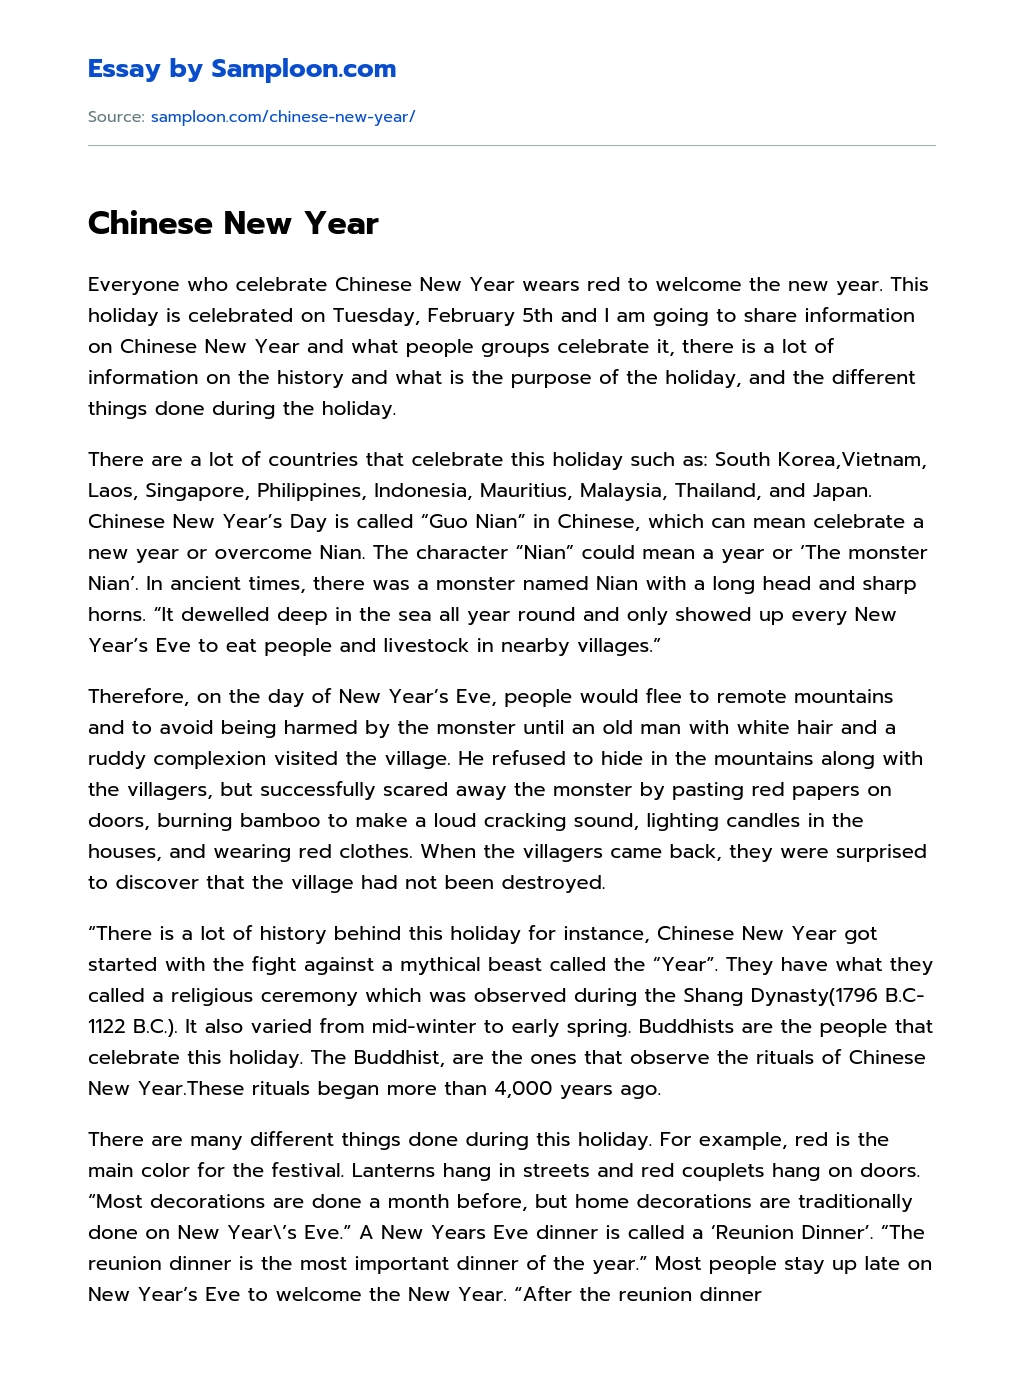 Chinese New Year essay